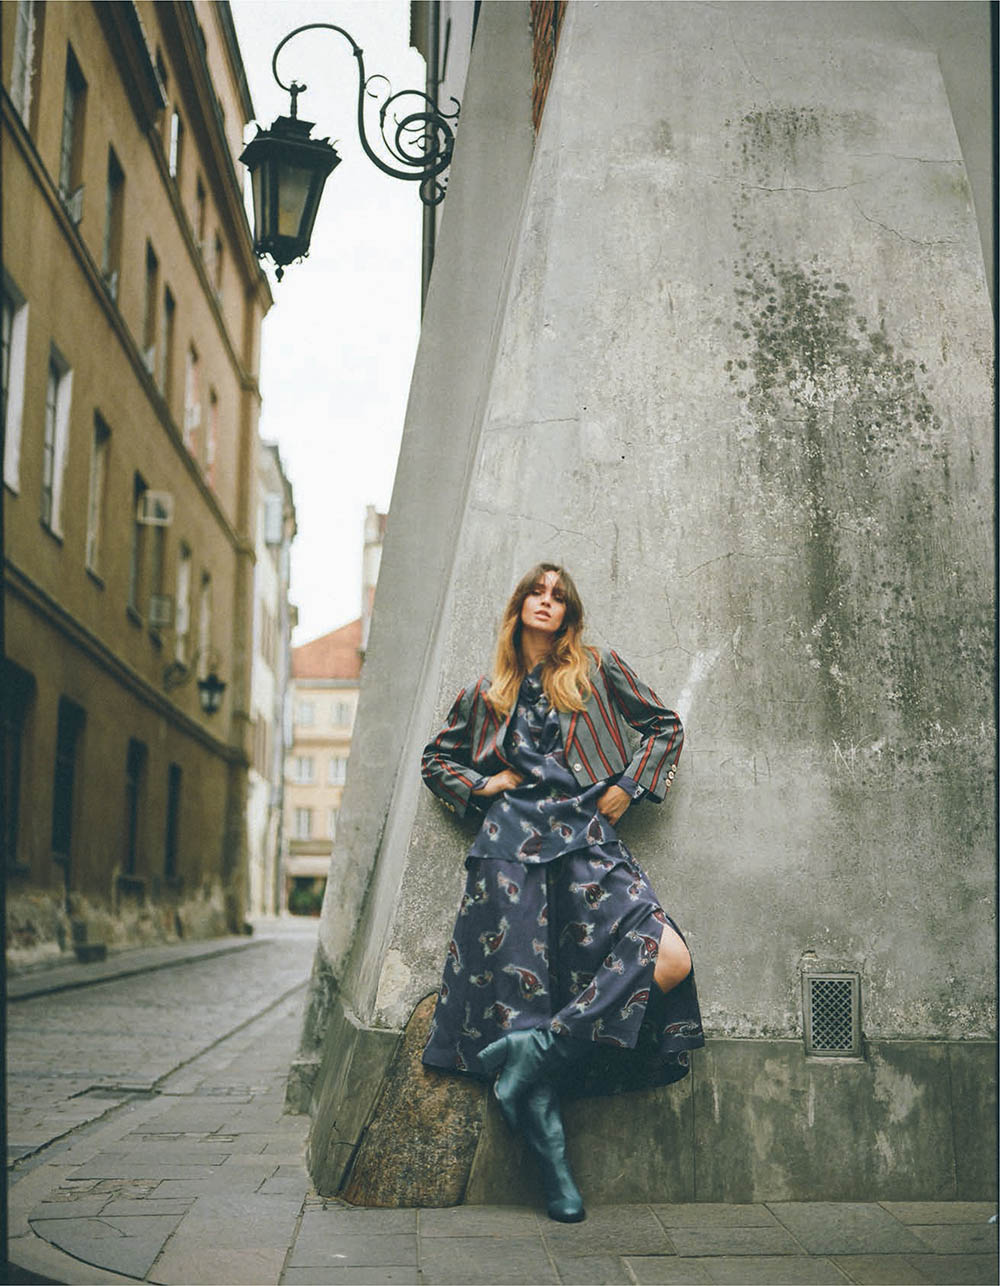 Maddie Kulicka by Bart Pogoda for Vogue Poland October 2019